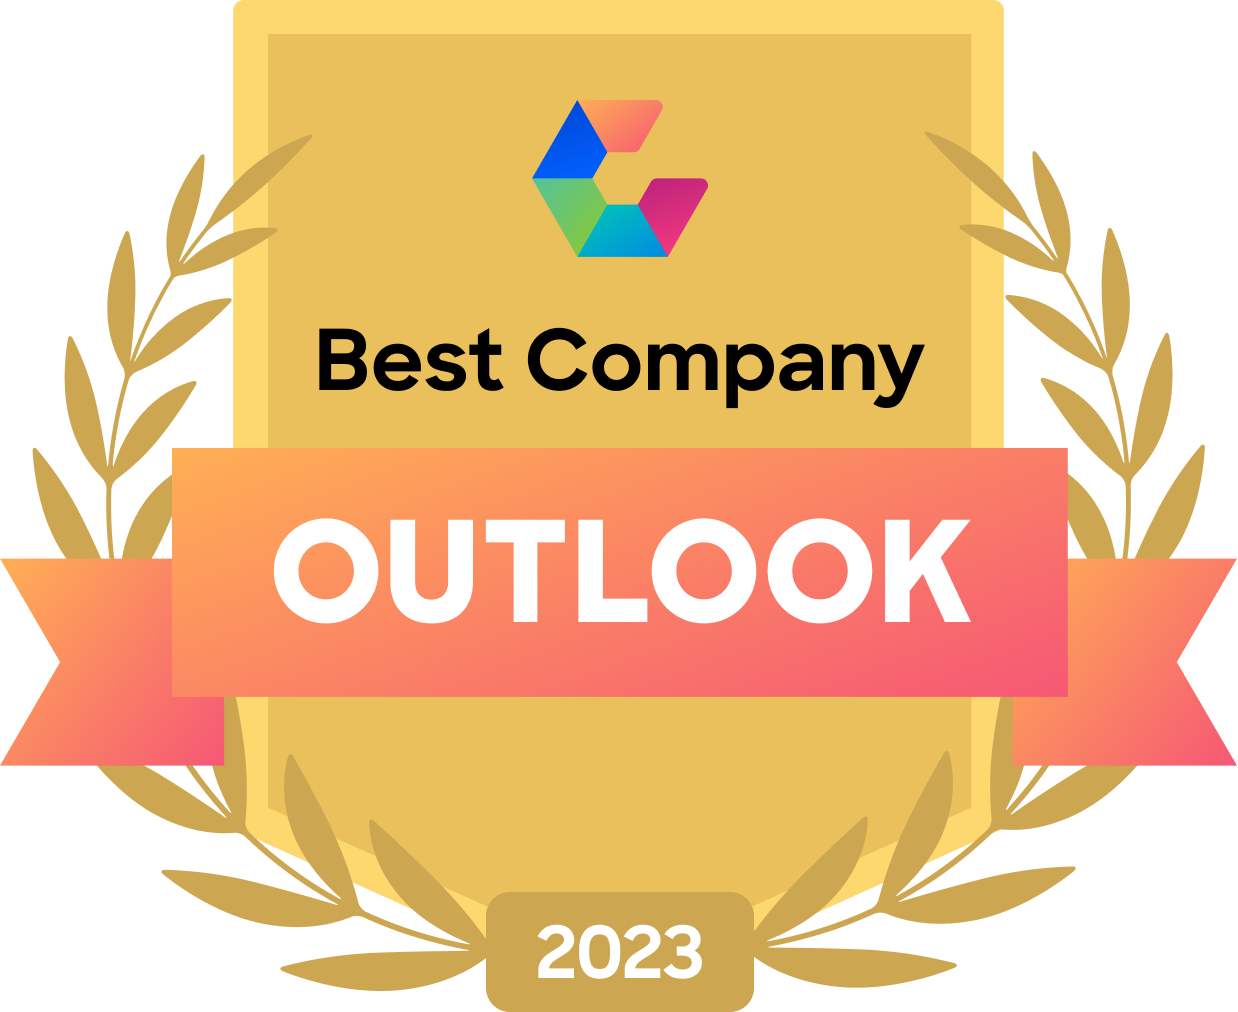 Best Company Award for Outlook 2023 Smartsheet